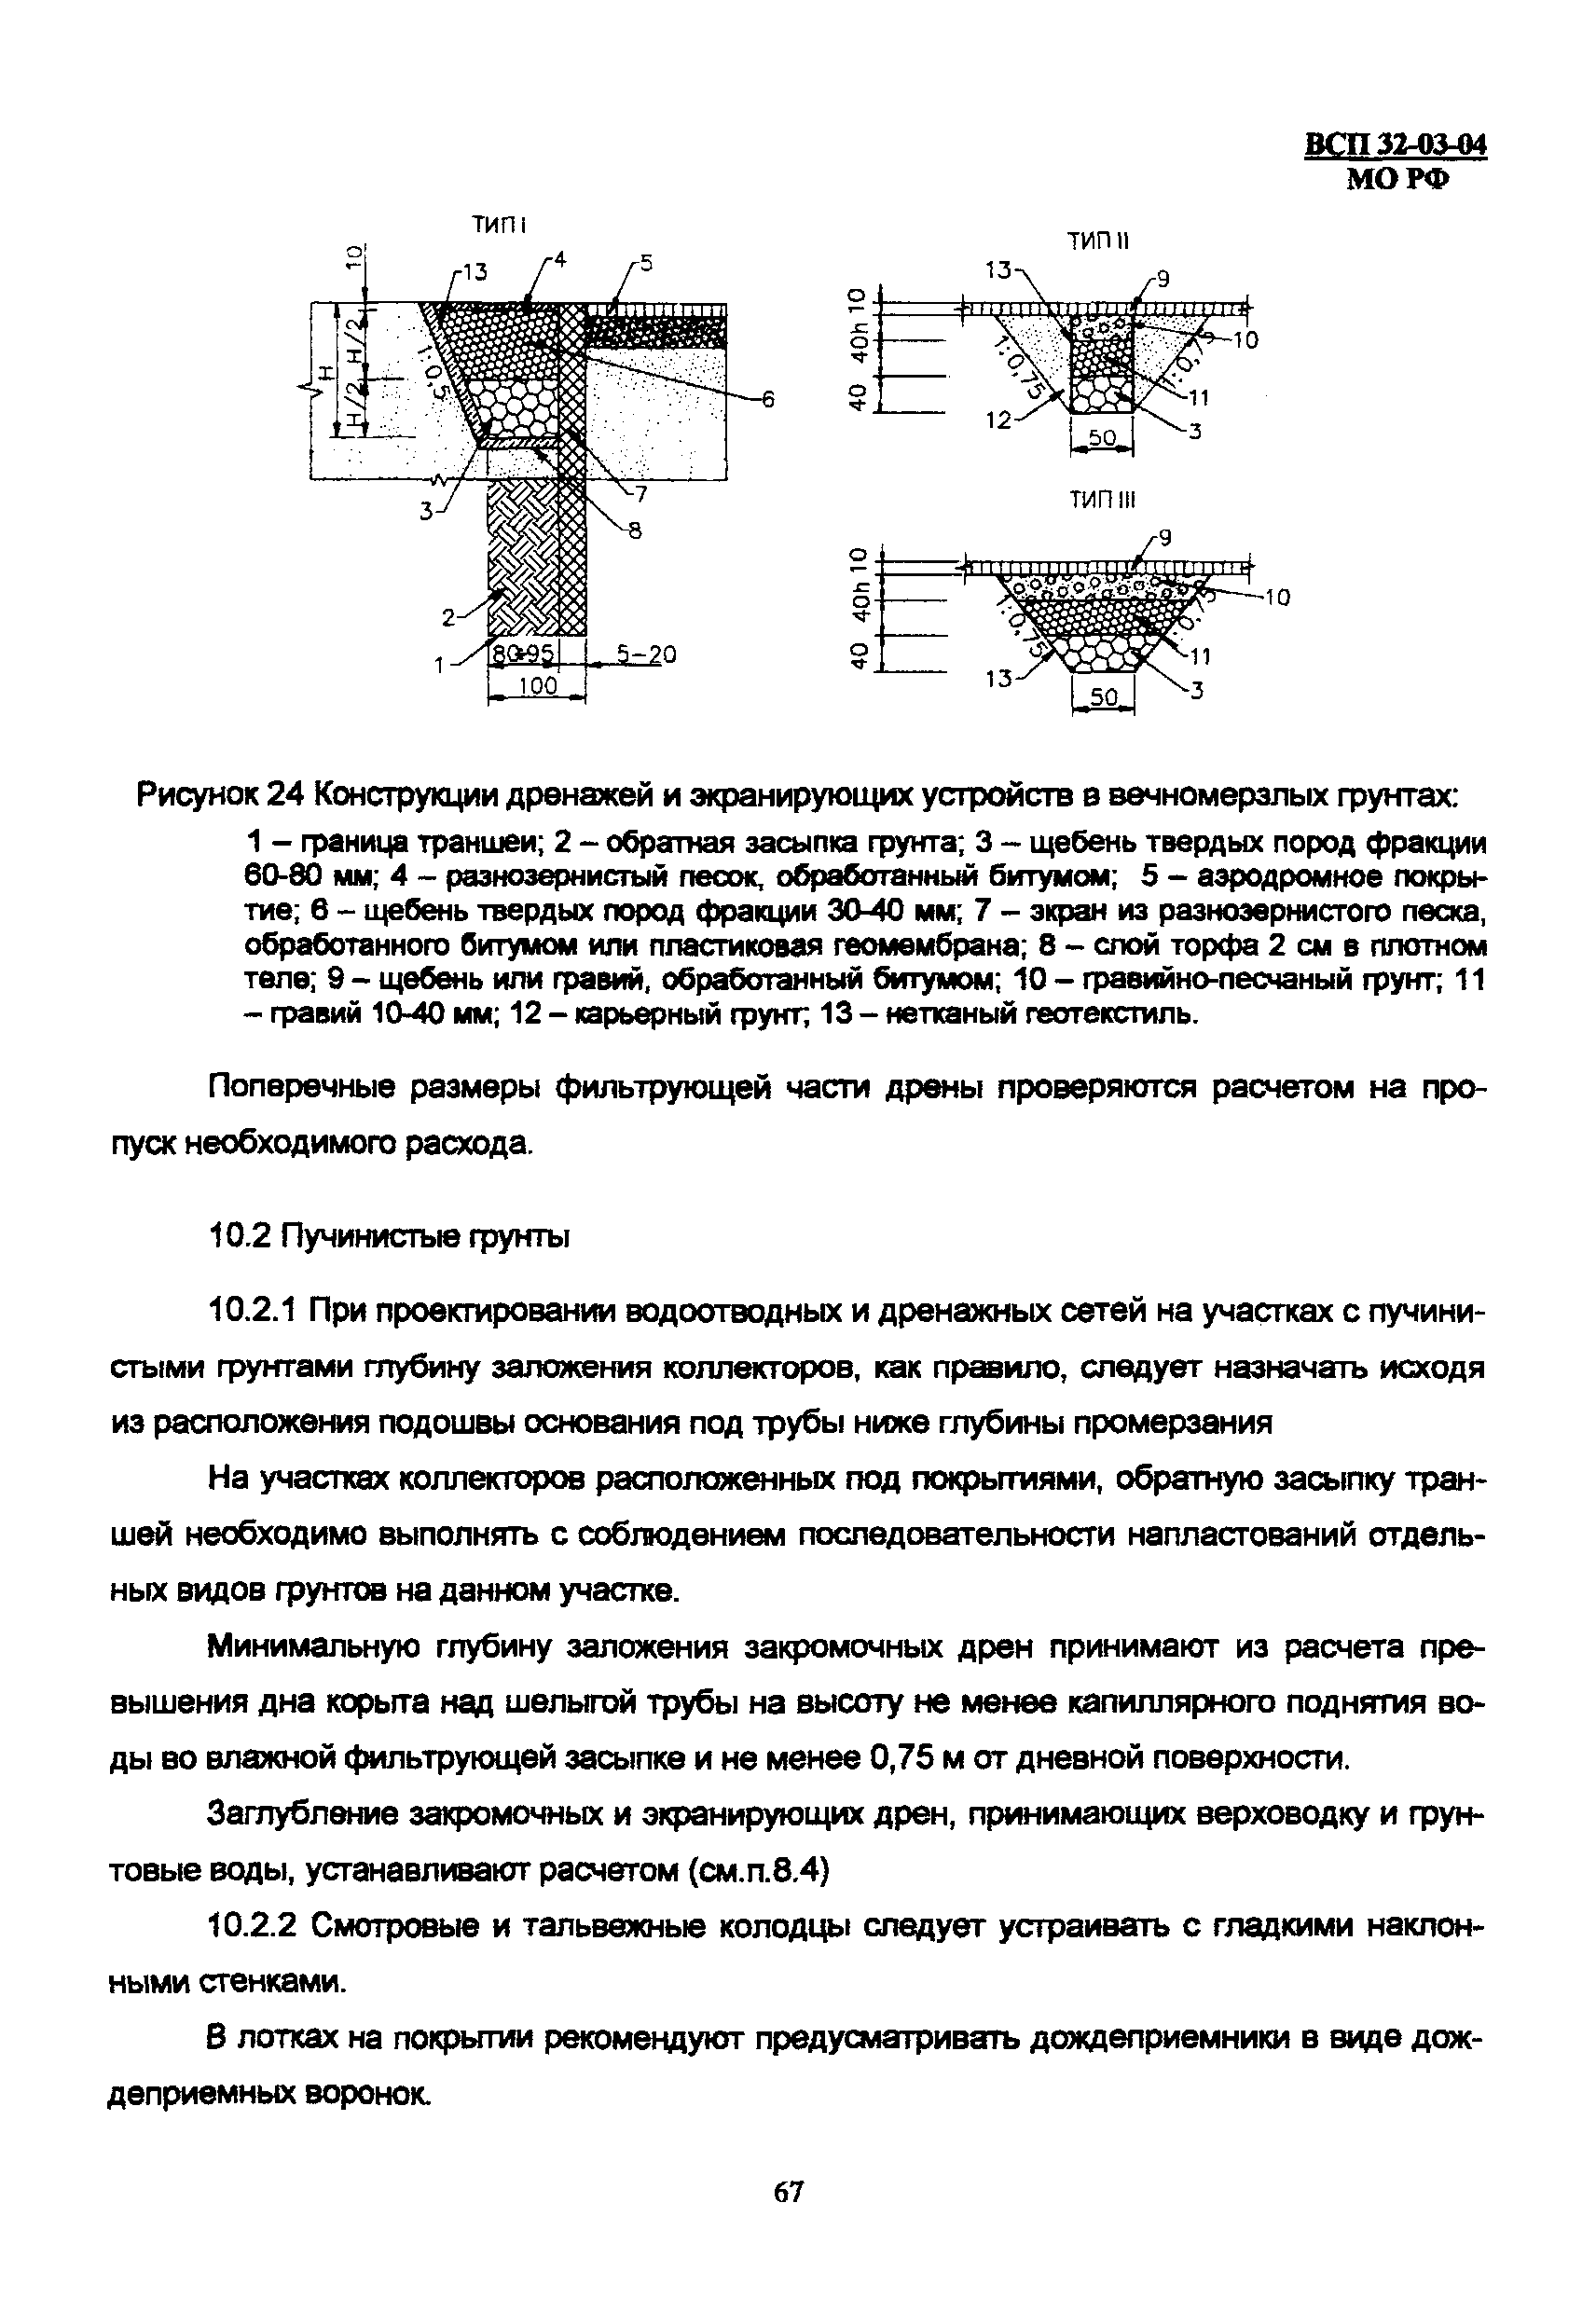 ВСП 32-03-04 МО РФ